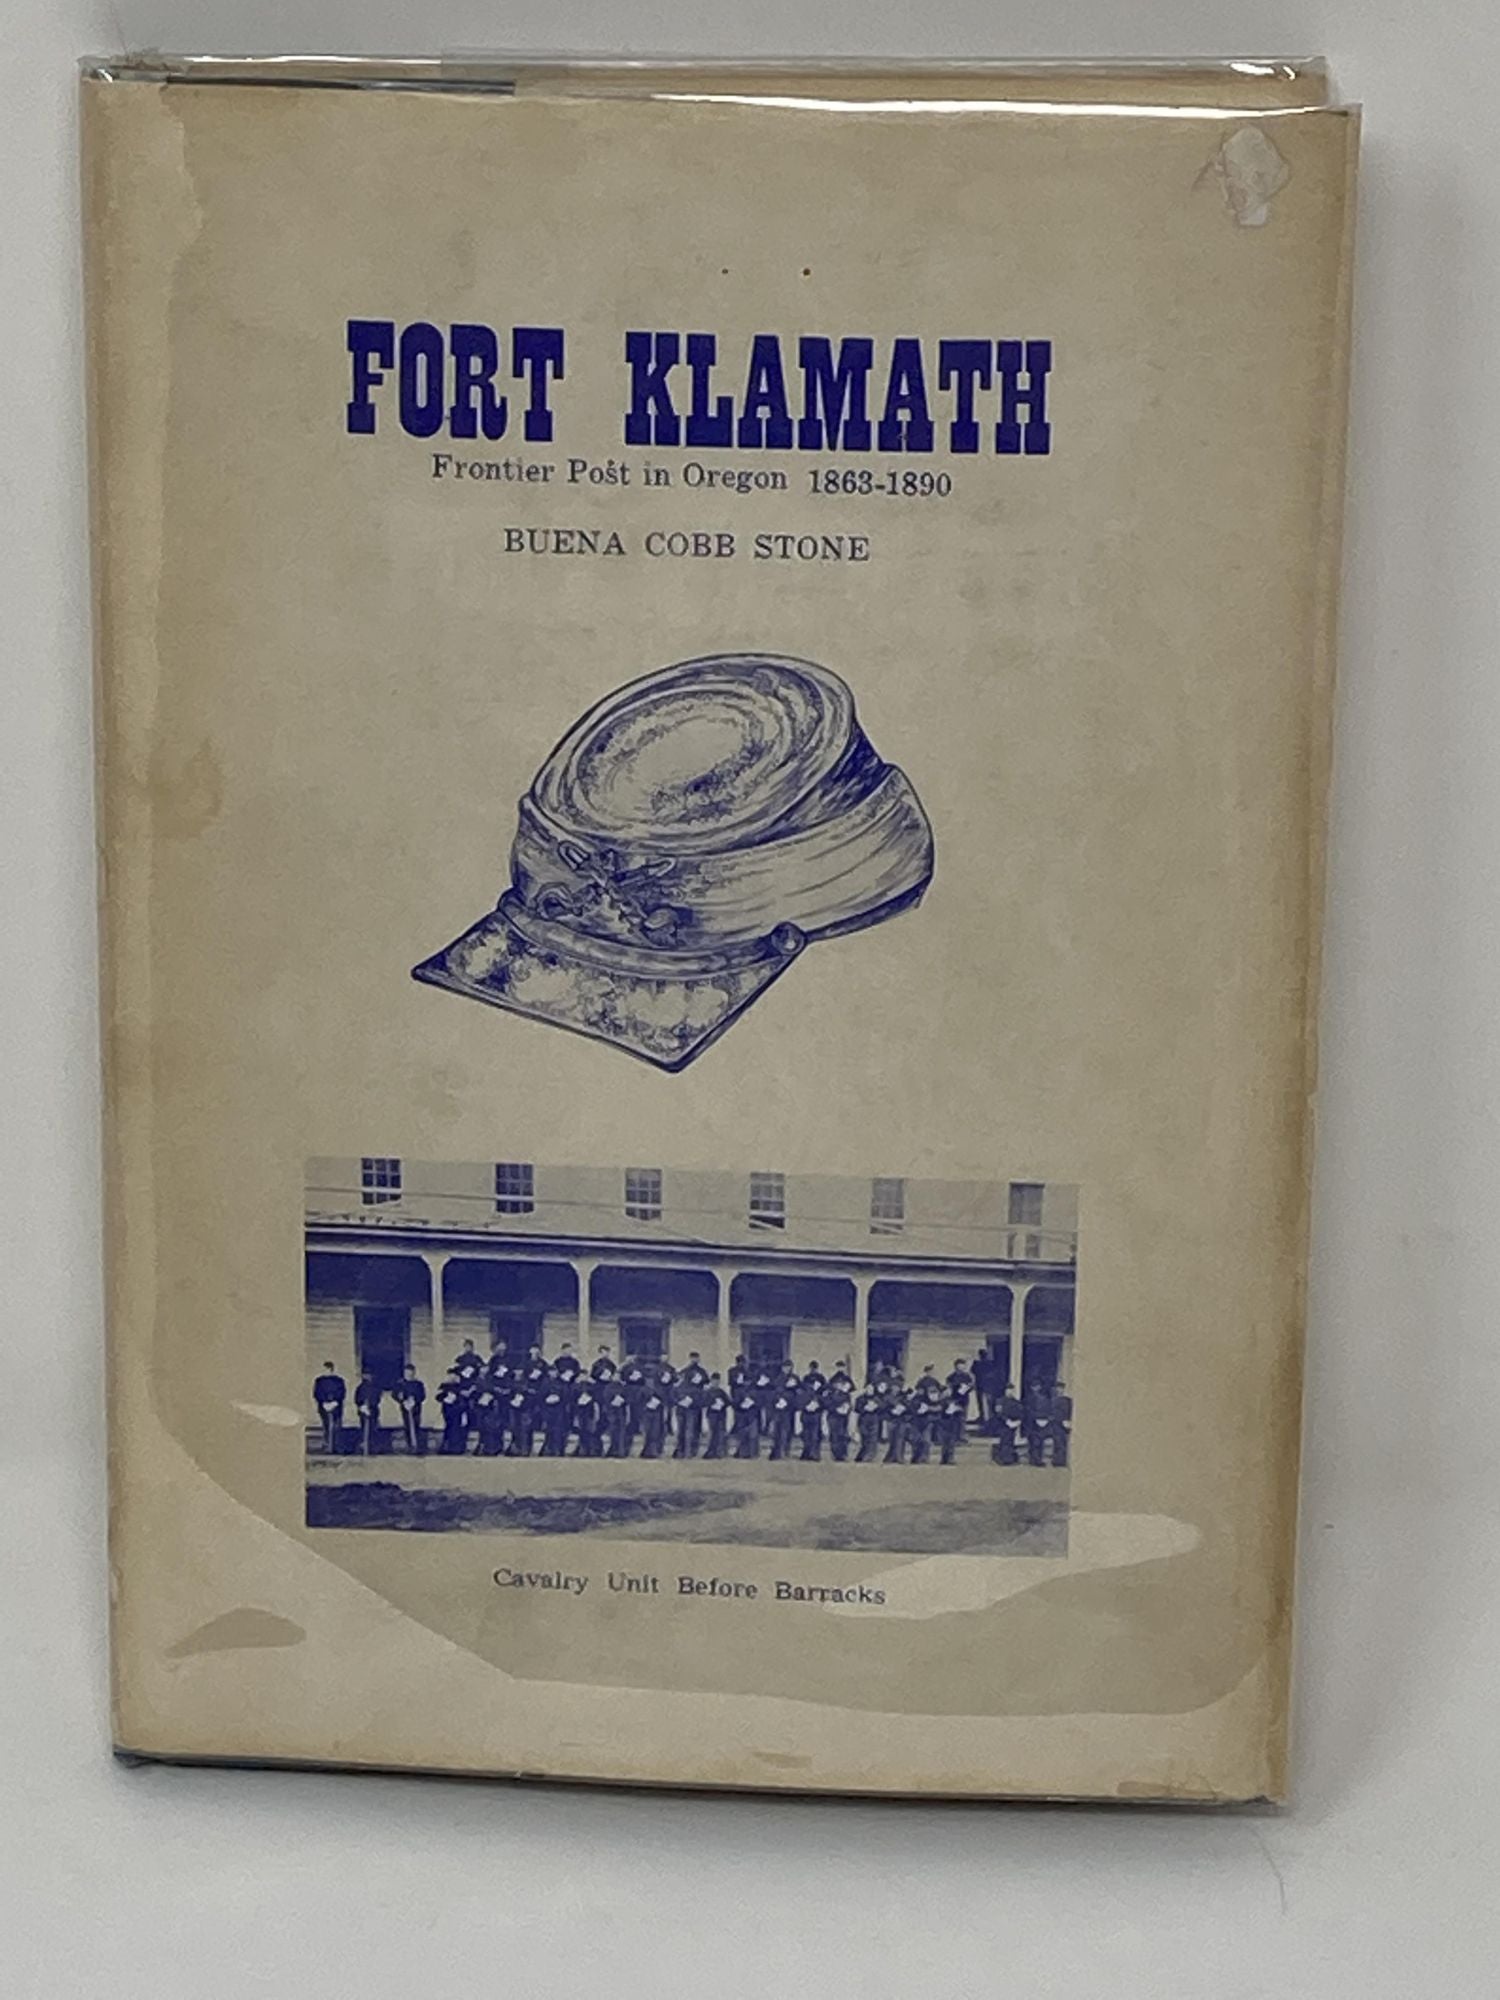 Stone, Buena Cobb - Fort Klamath, Frontier Post in Oregon, 1863 - 1890